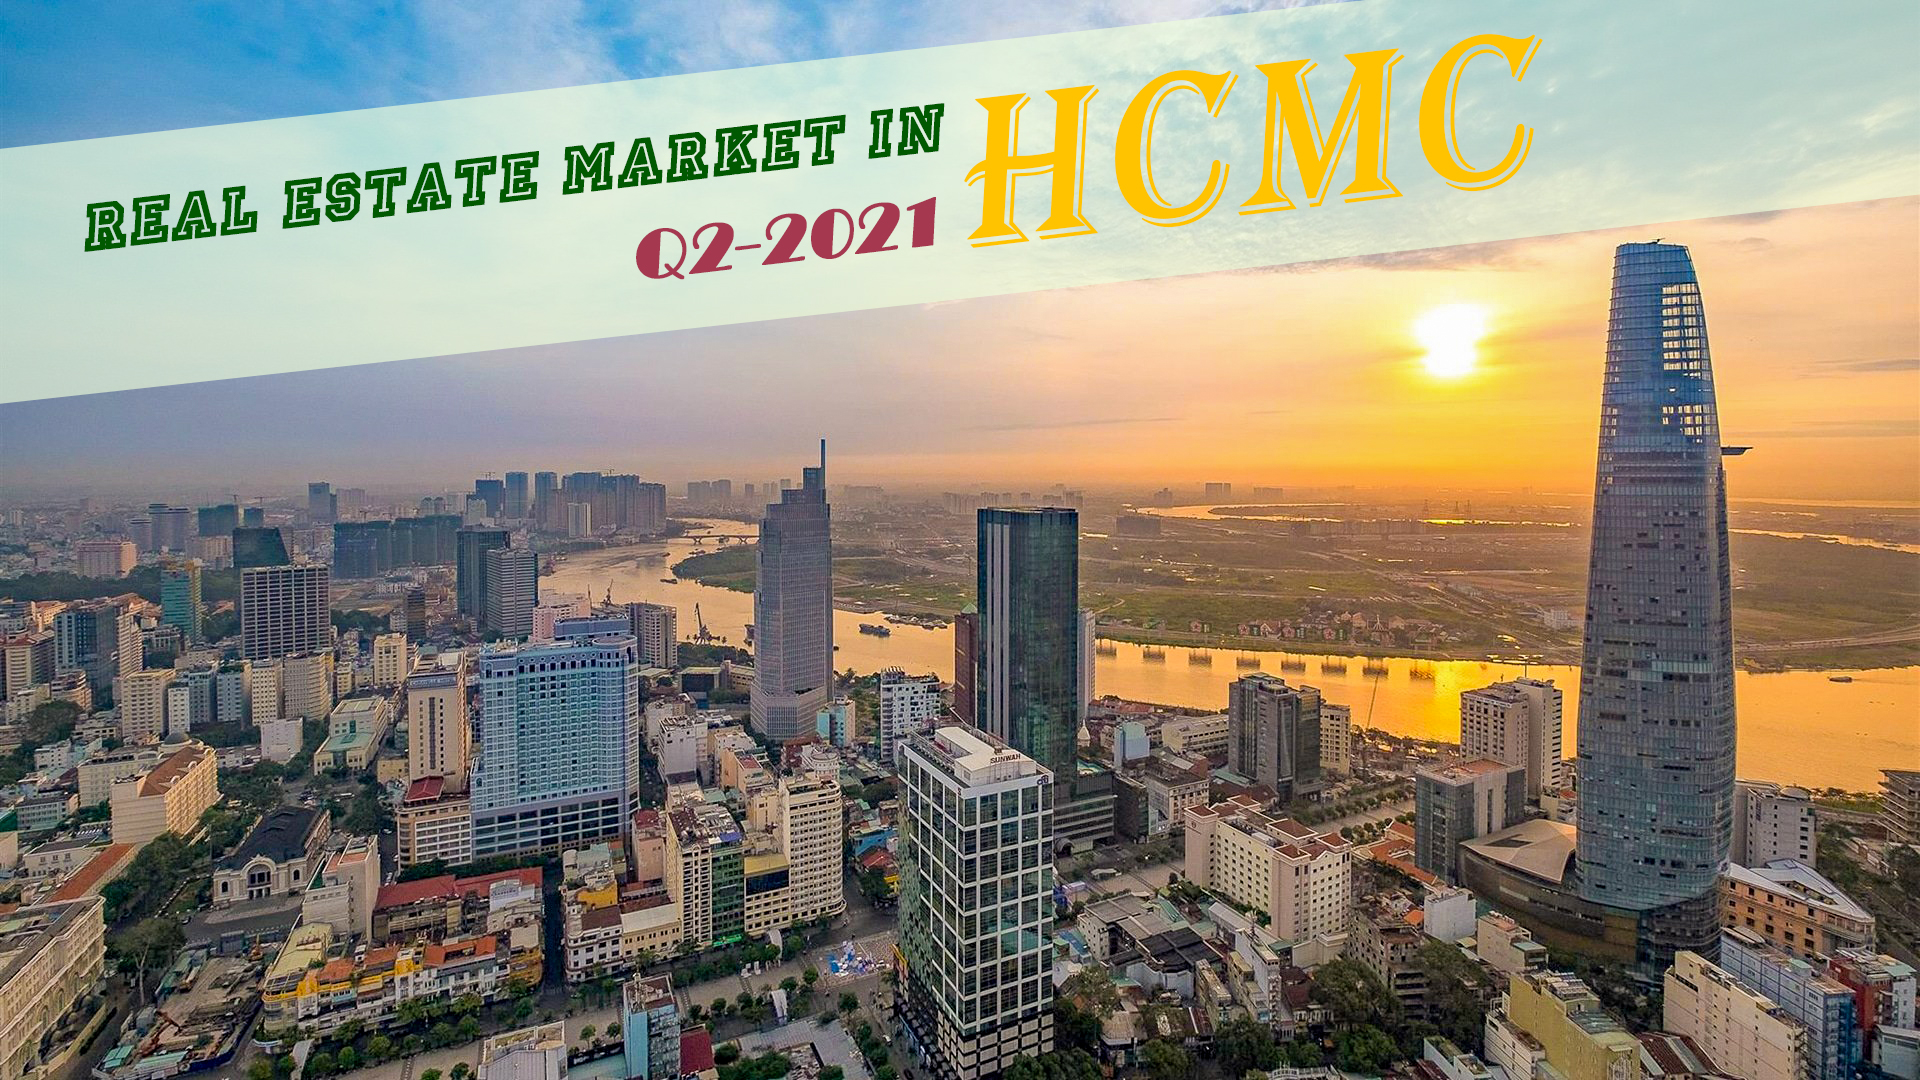 Real estate market in HCMC – Q2 2021